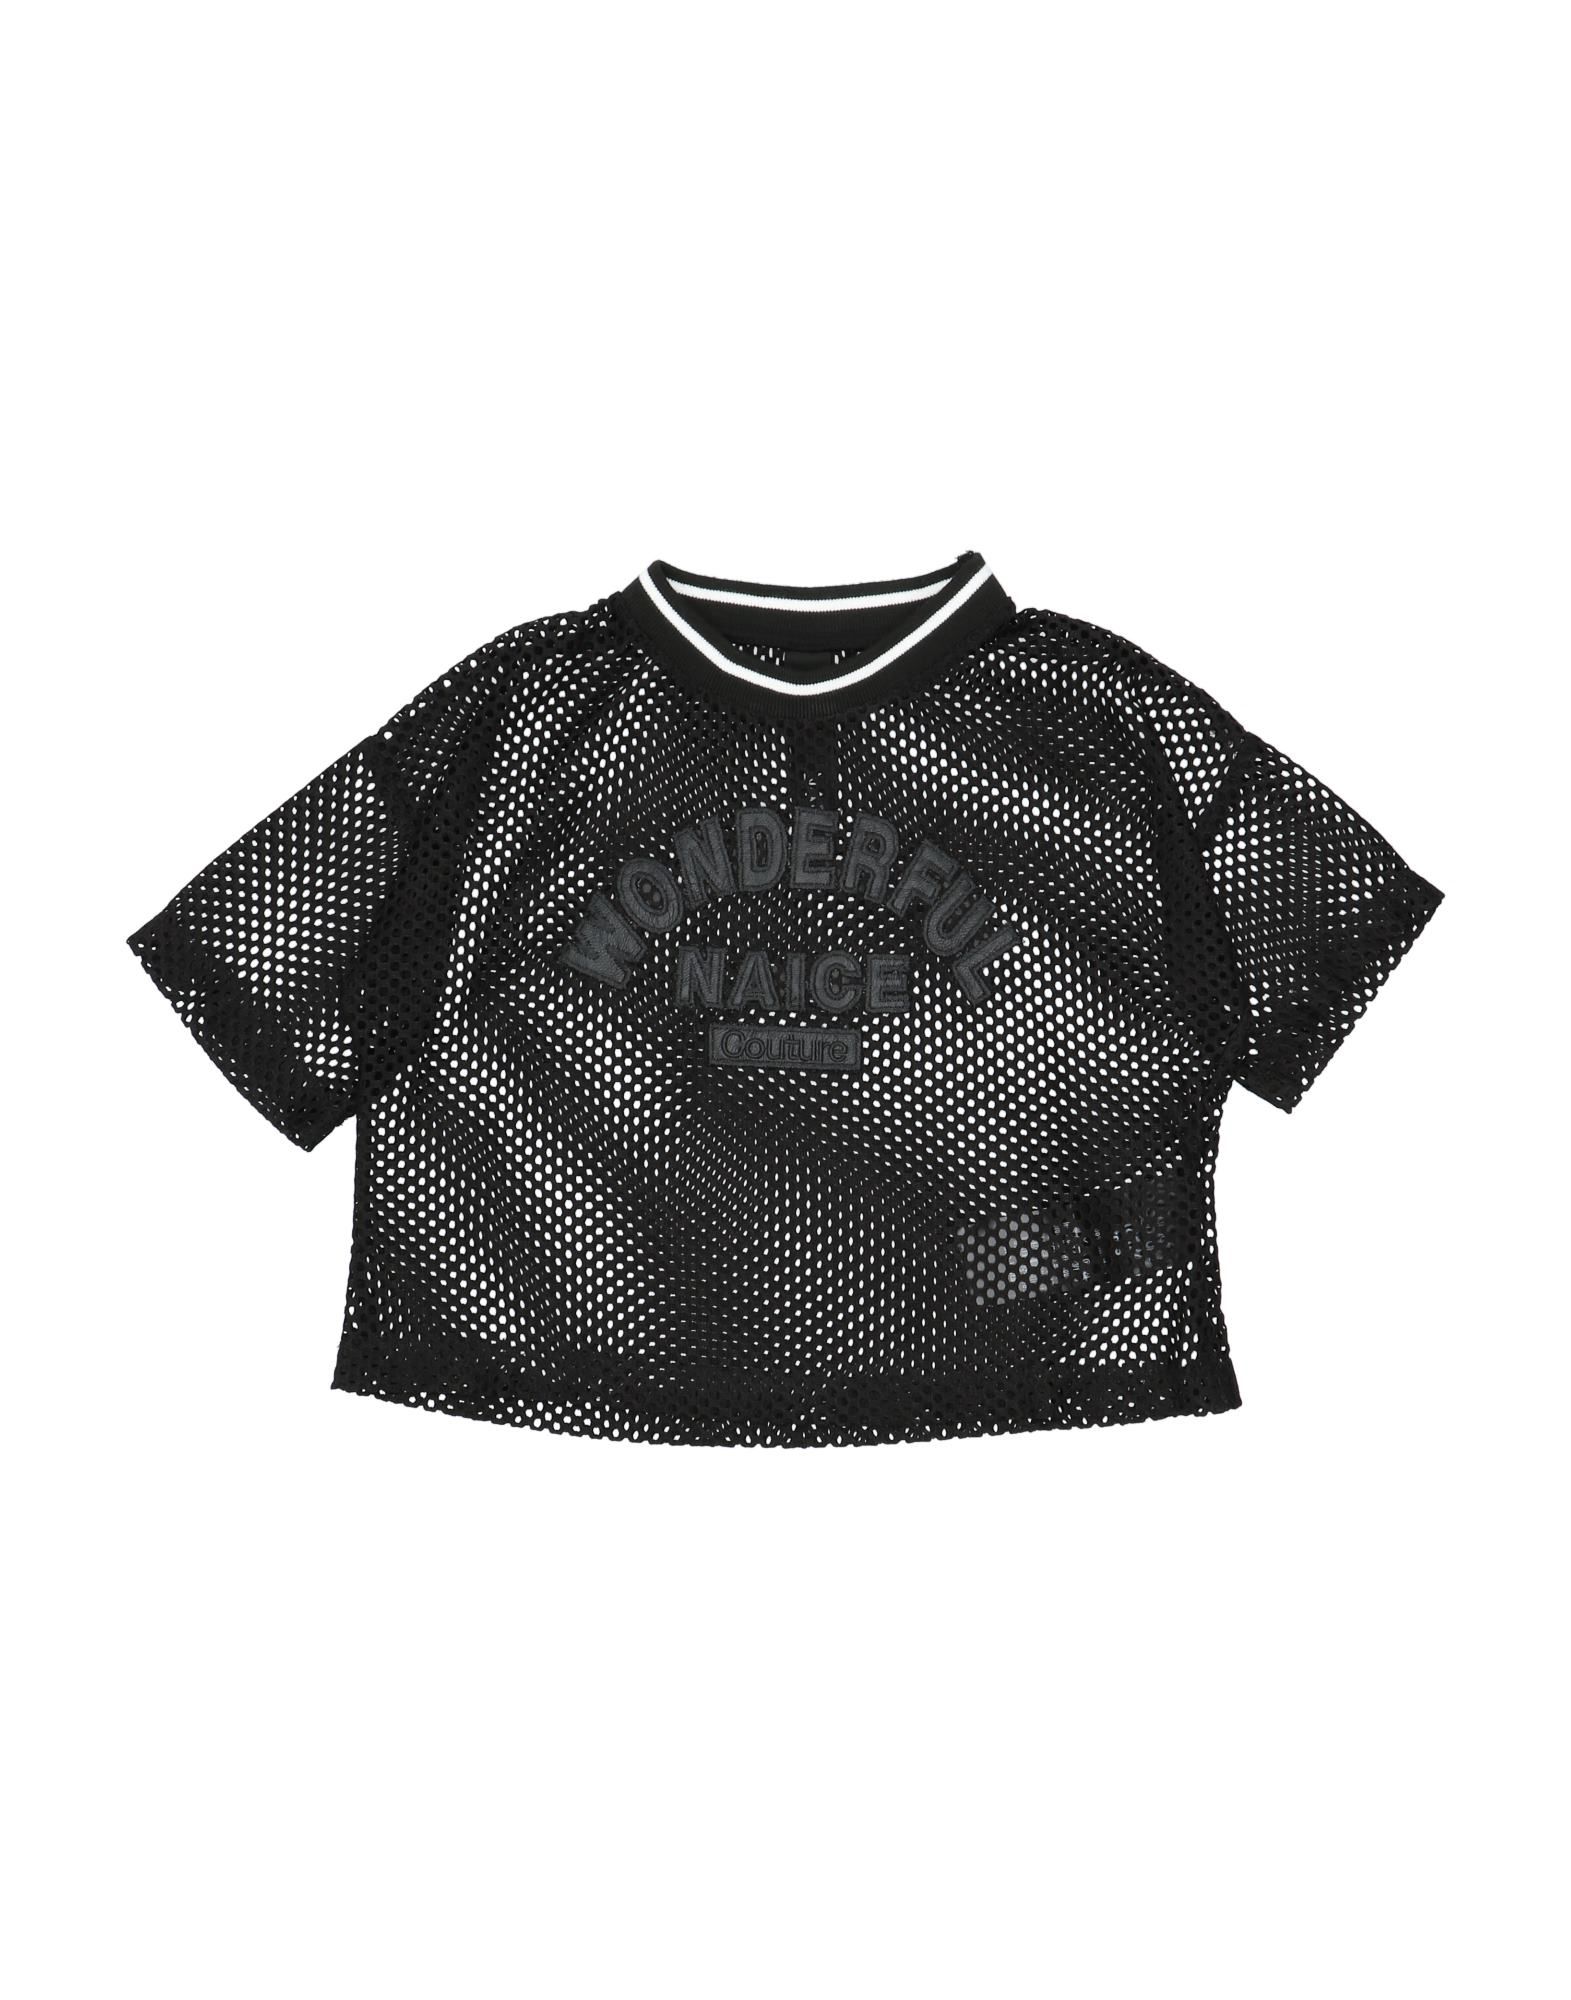 Naïce Kids' T-shirts In Black